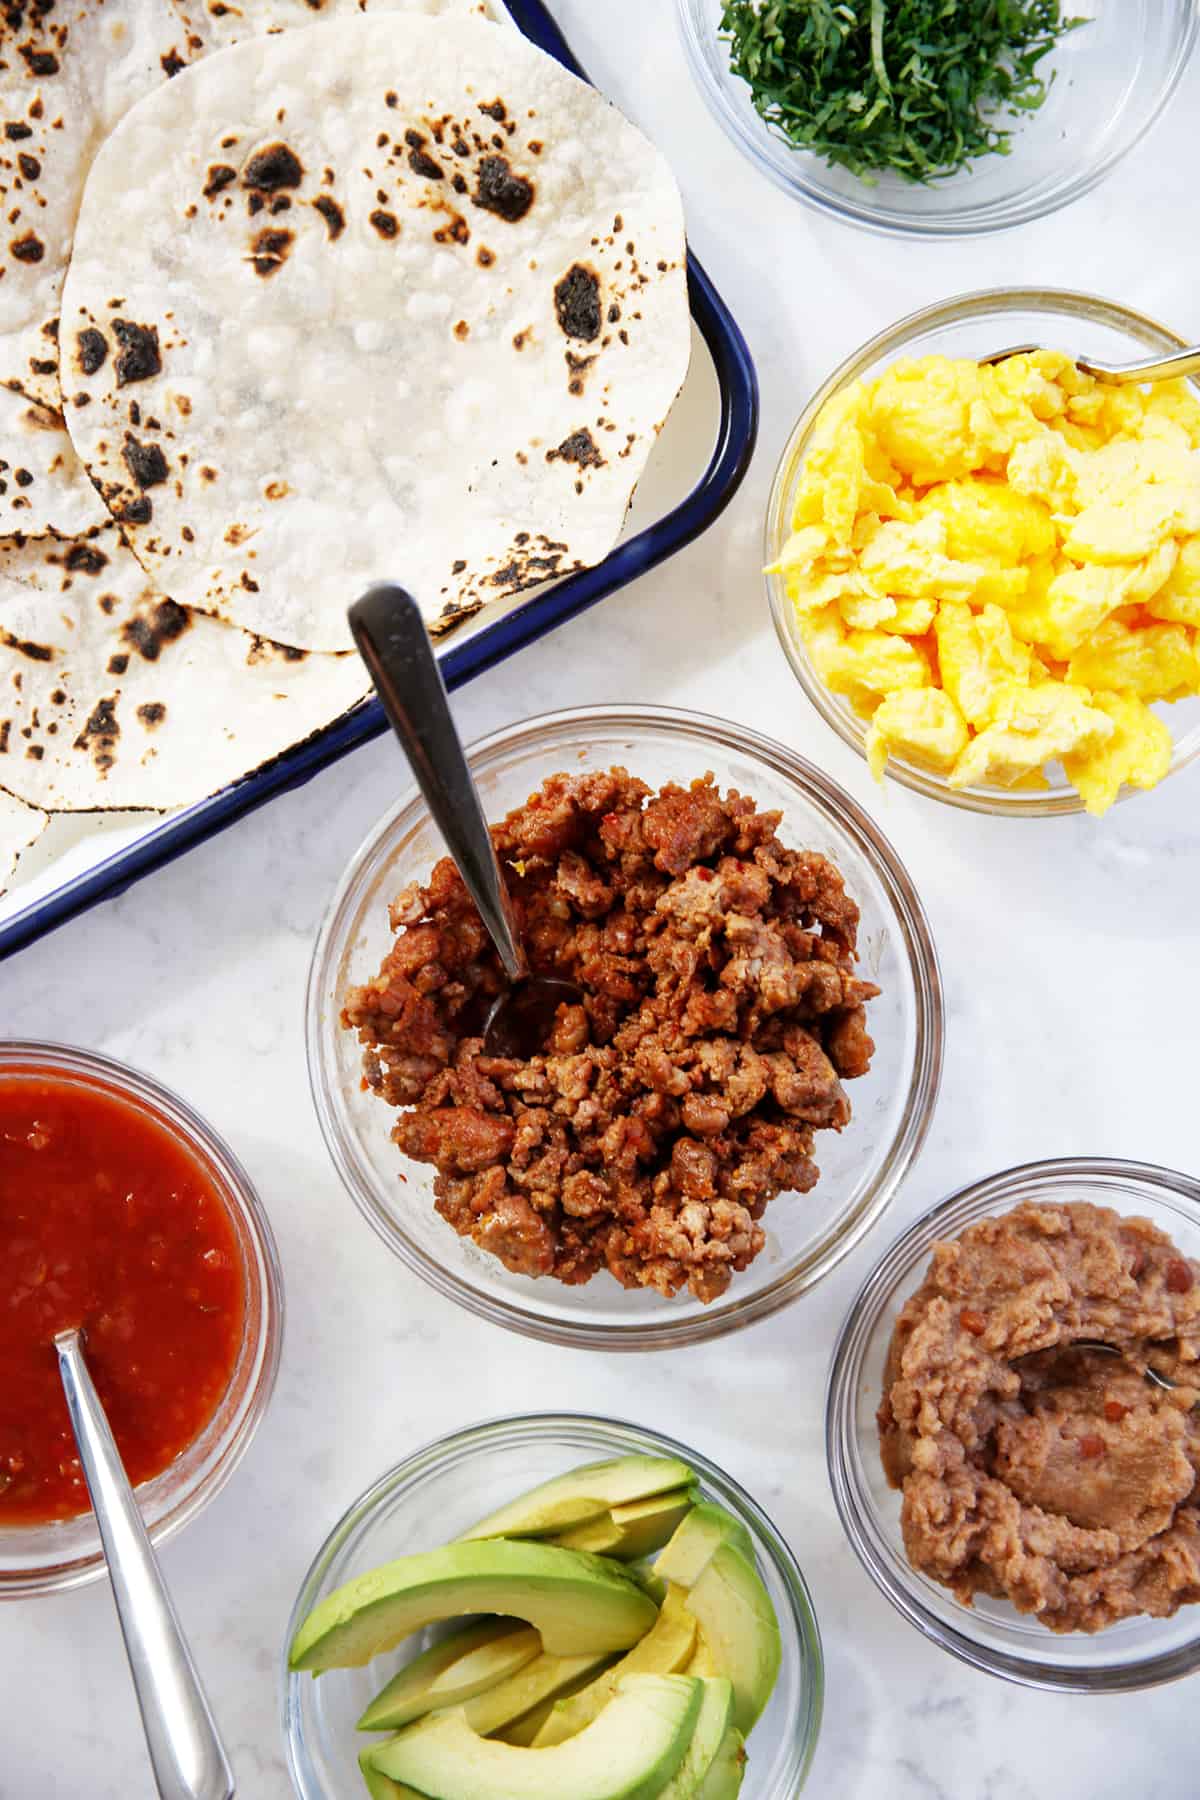 Ingredients for Breakfast tacos.